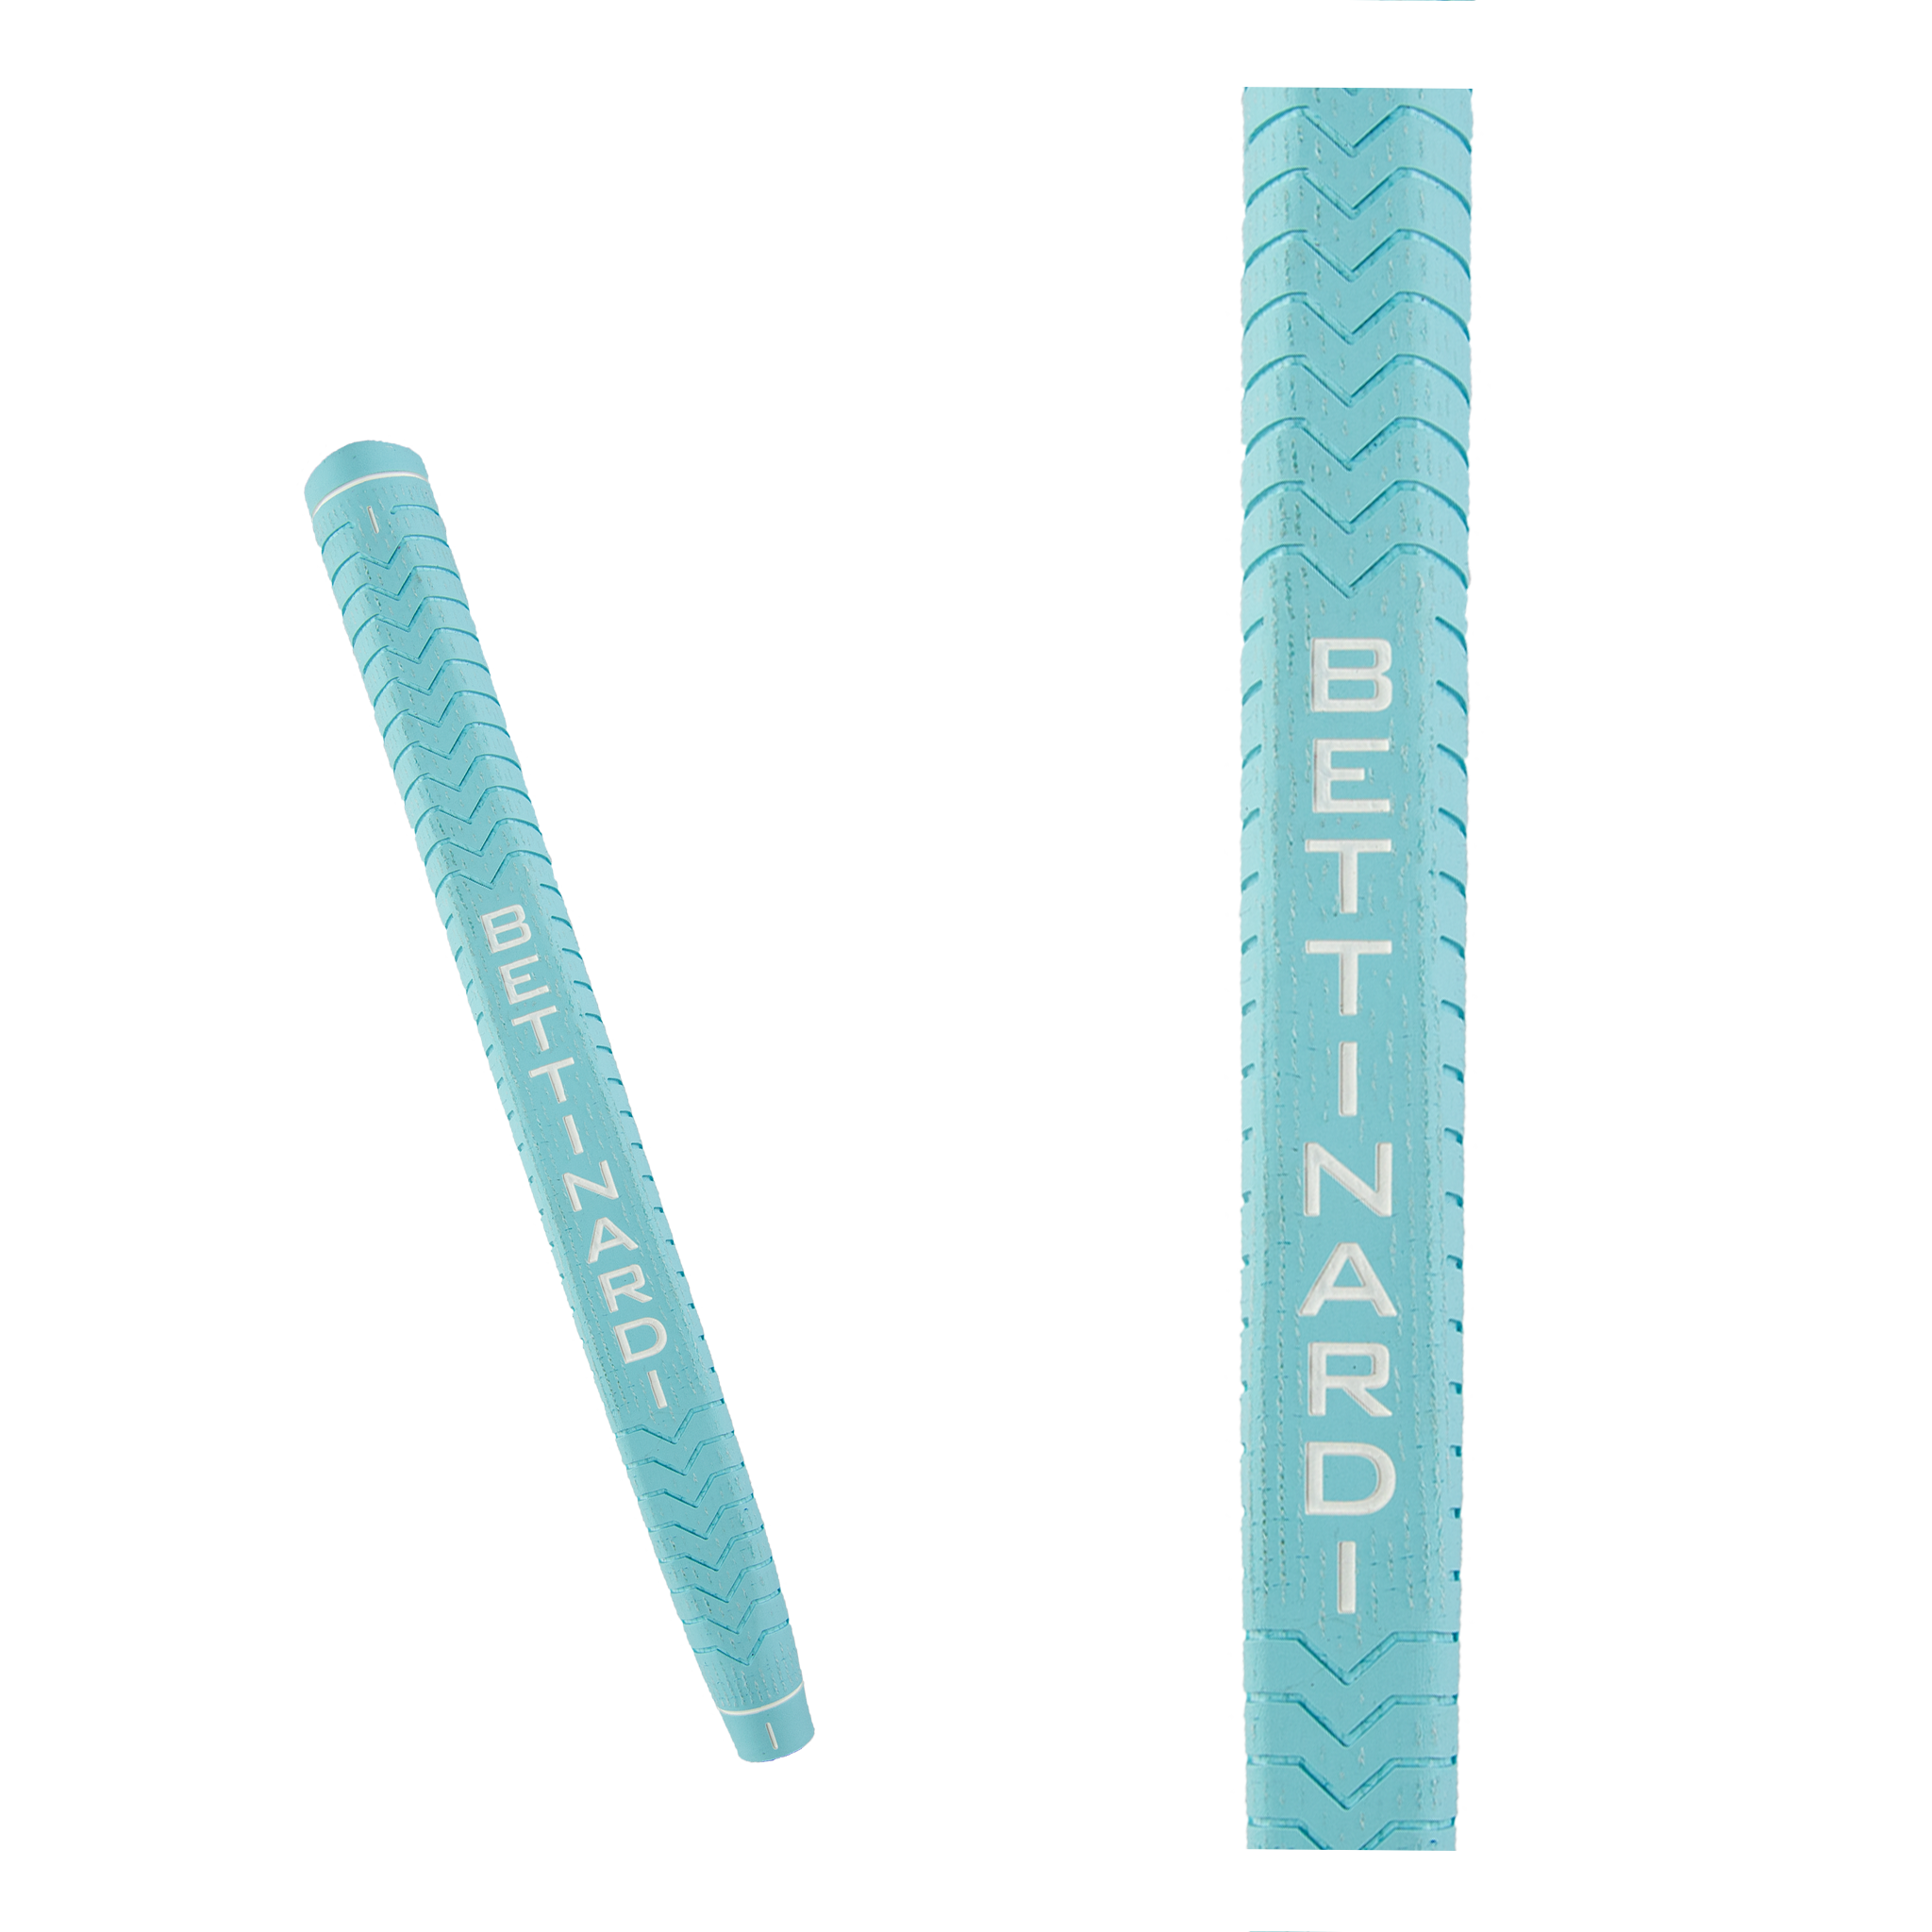 Aqua Bettinardi Deep Etched Putter Grip (Standard)